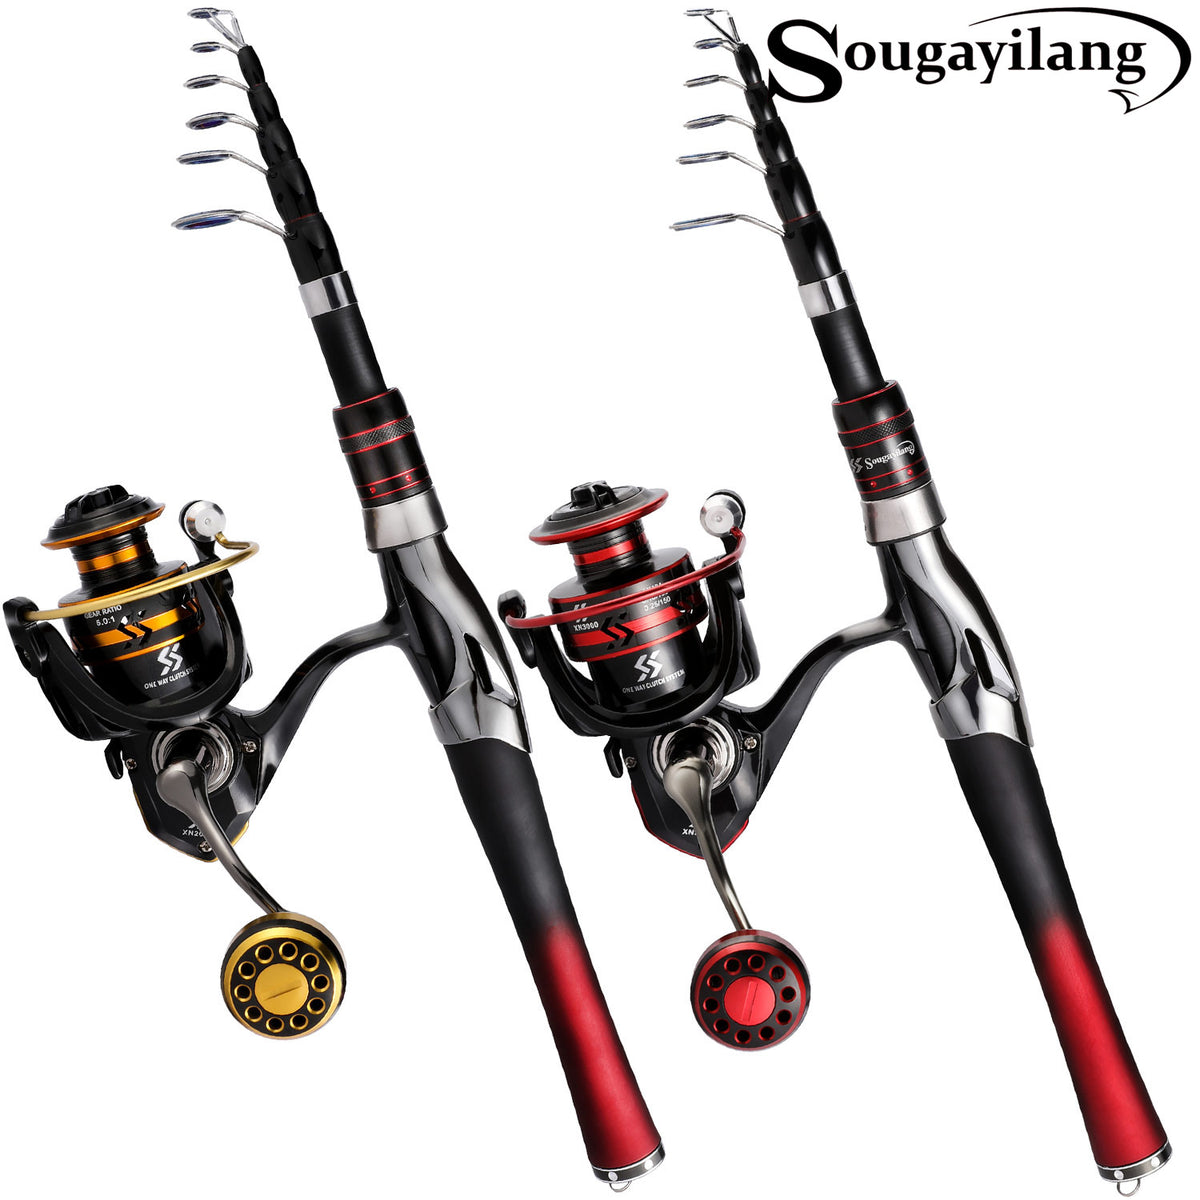 Sougayilang 1.6M Telescopic Portable Spinning Fishing Rod and Fishing